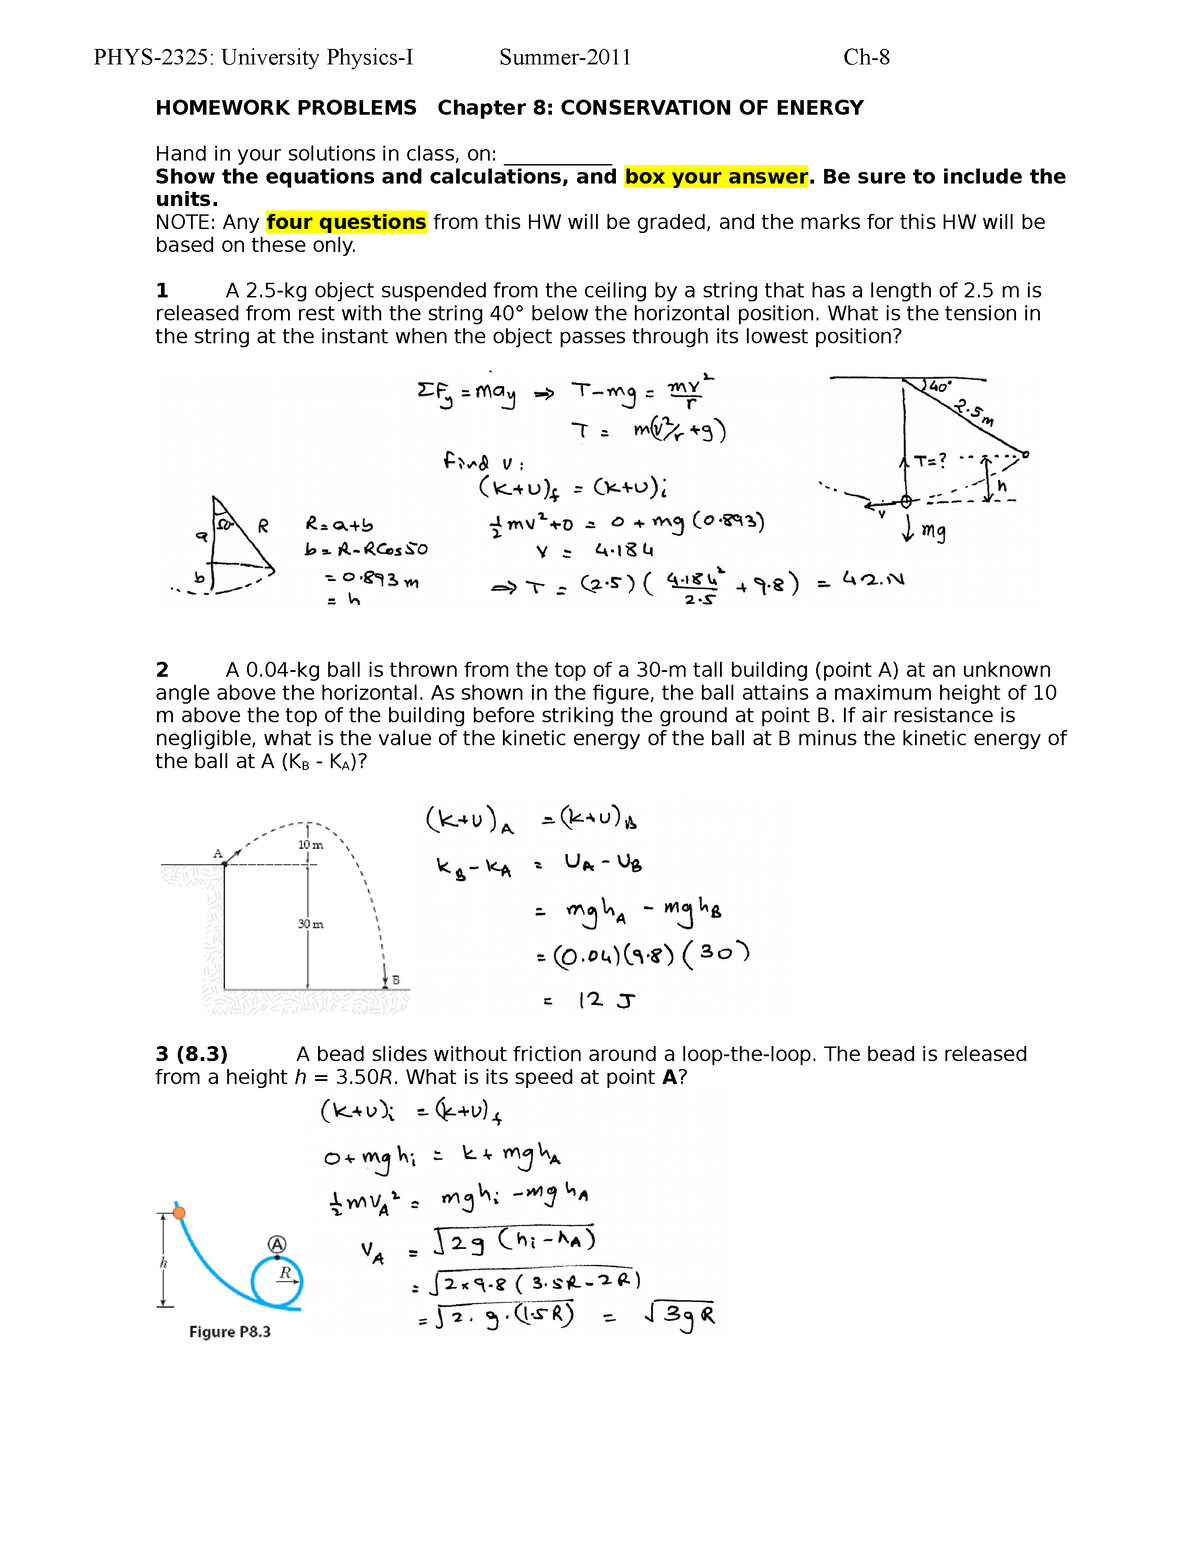 ap physics 1 homework conservation of energy